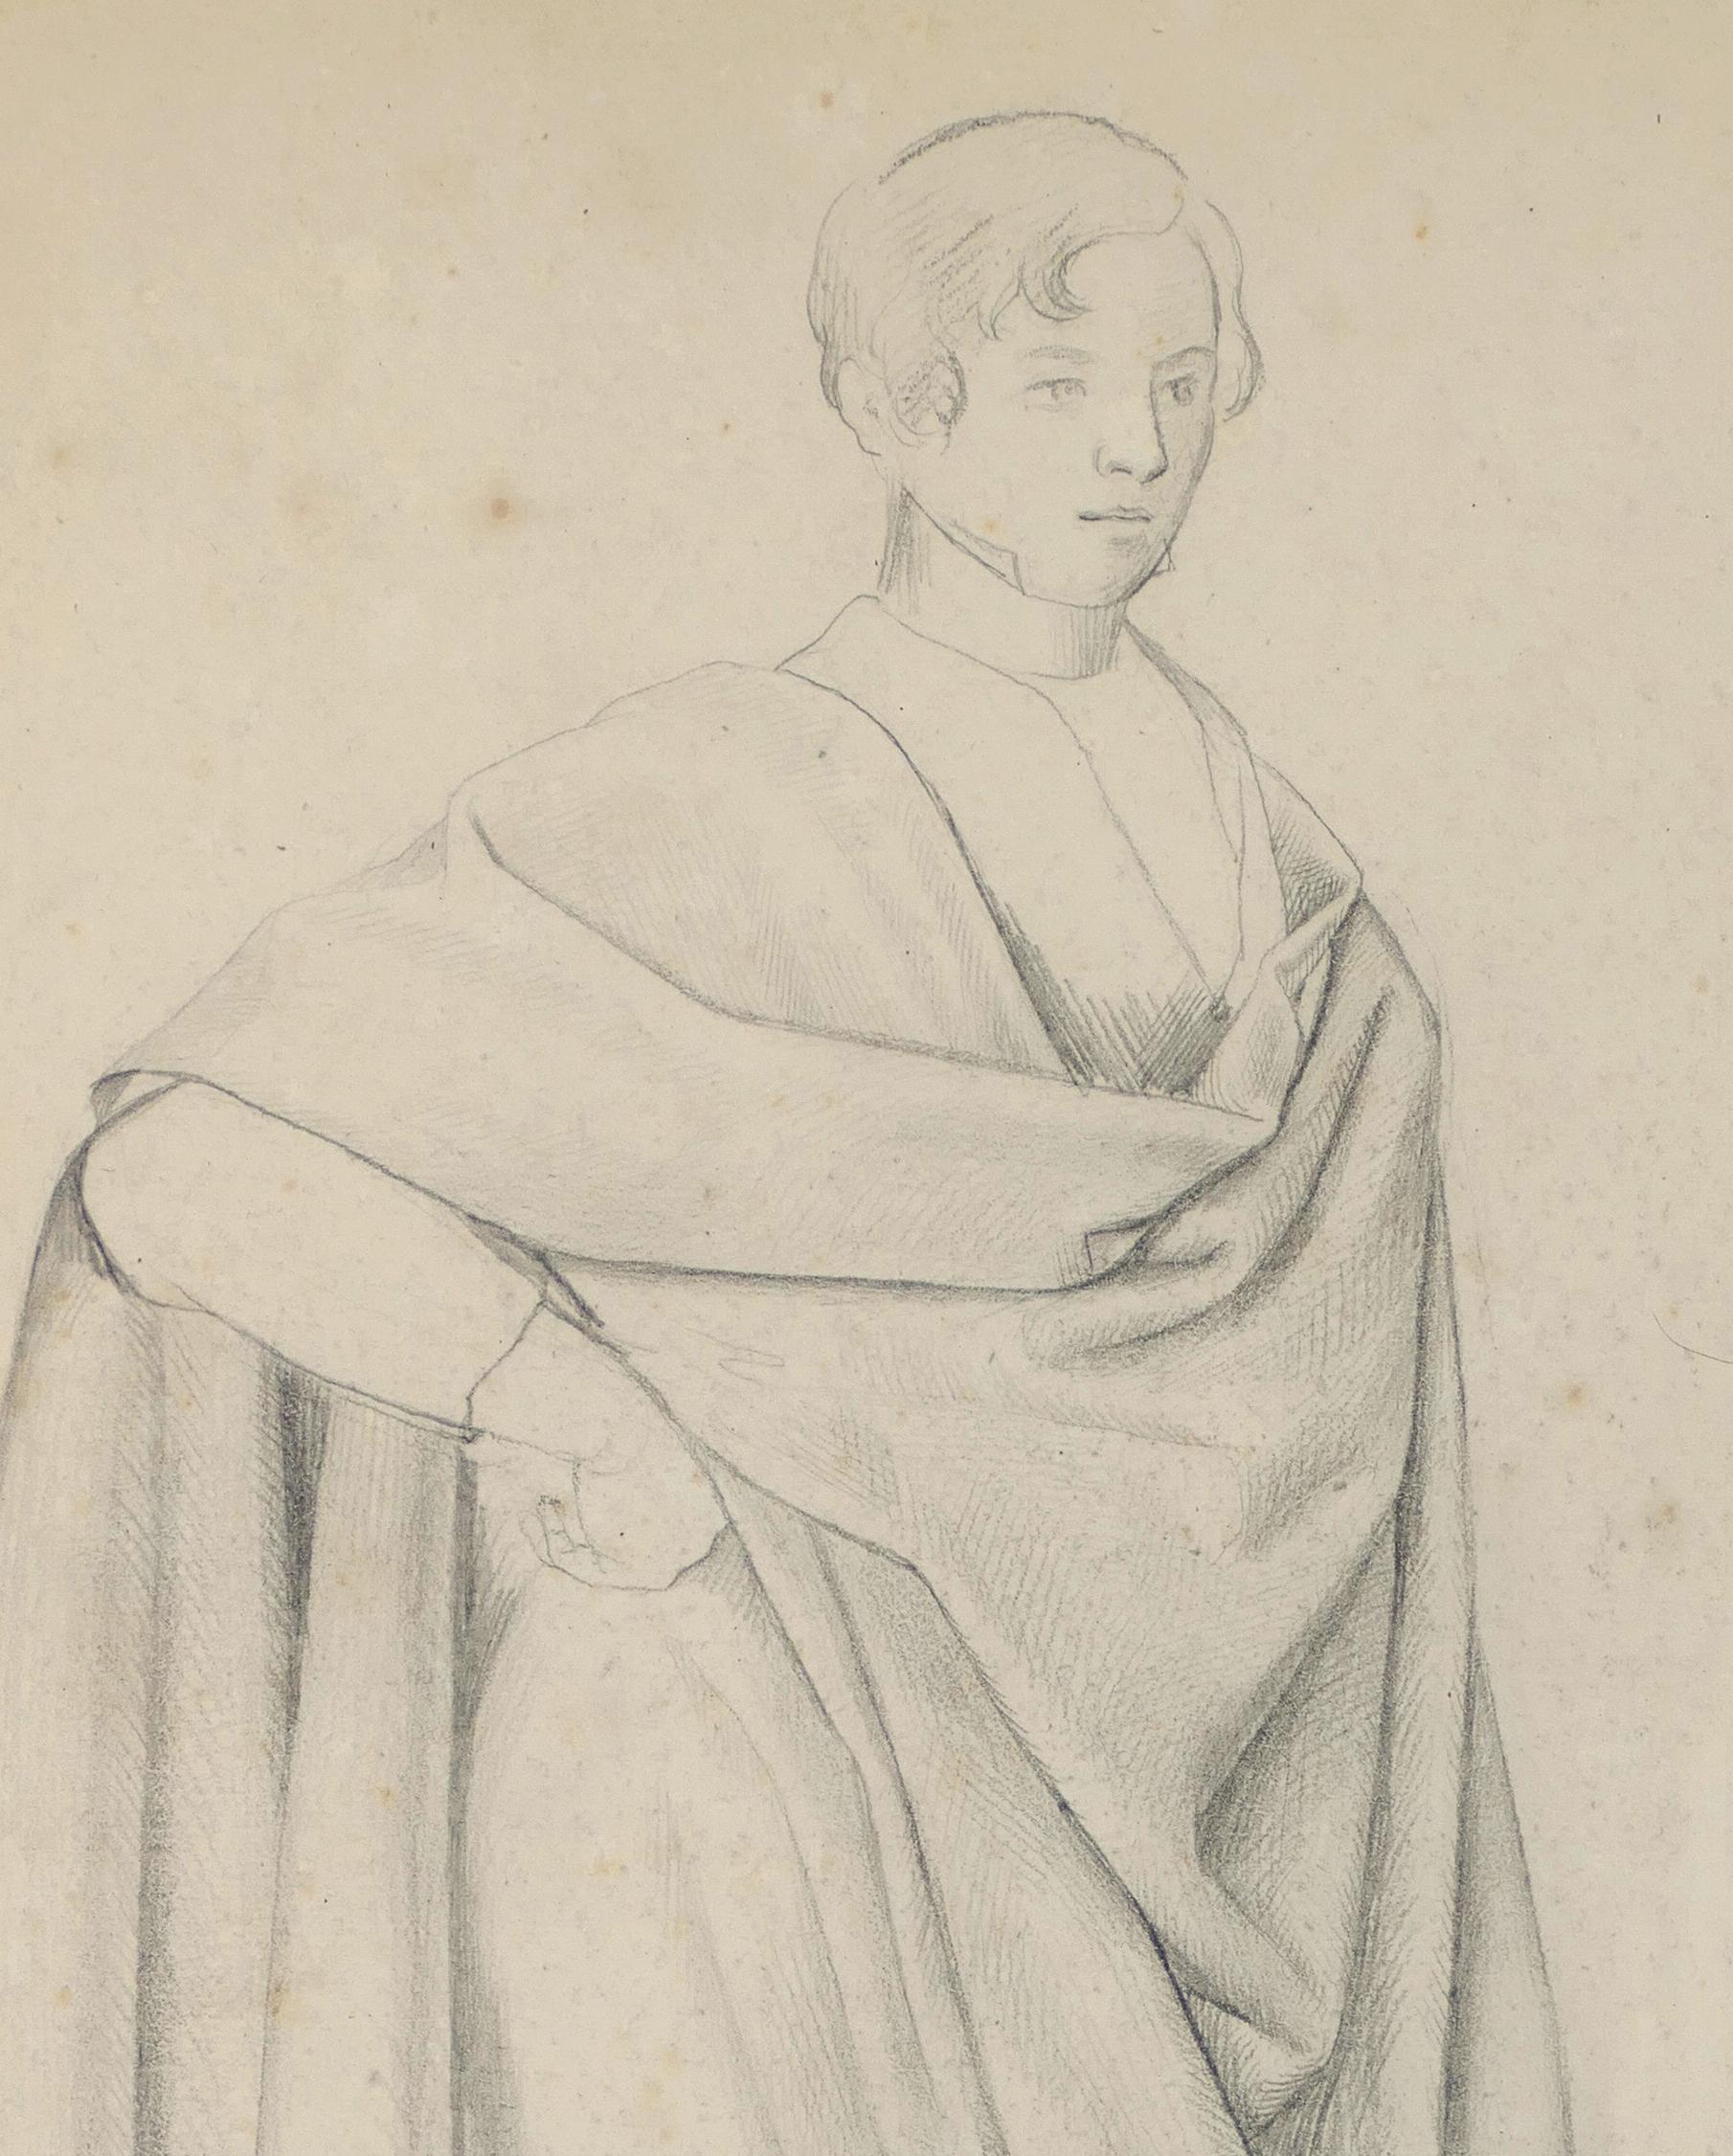 Man with Cloak - Original Pencil Drawing by H. Goldschmidt - Late 19th Century - Art by Hermann Goldschmidt